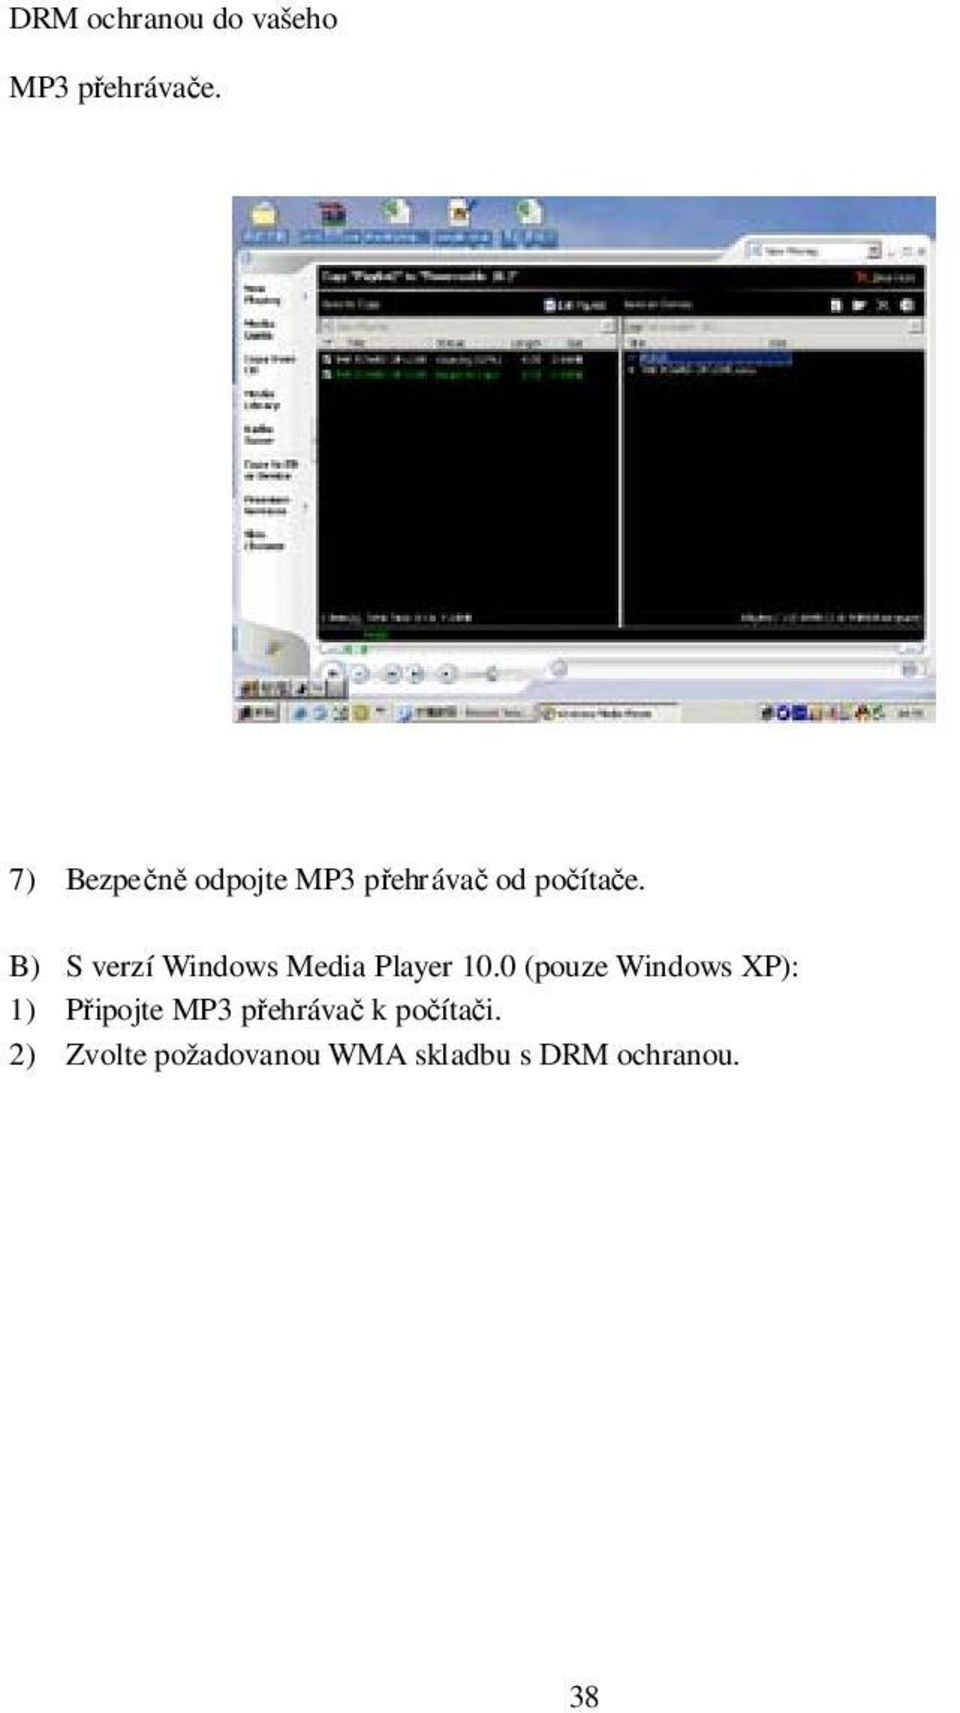 B) S verzí Windows Media Player 10.